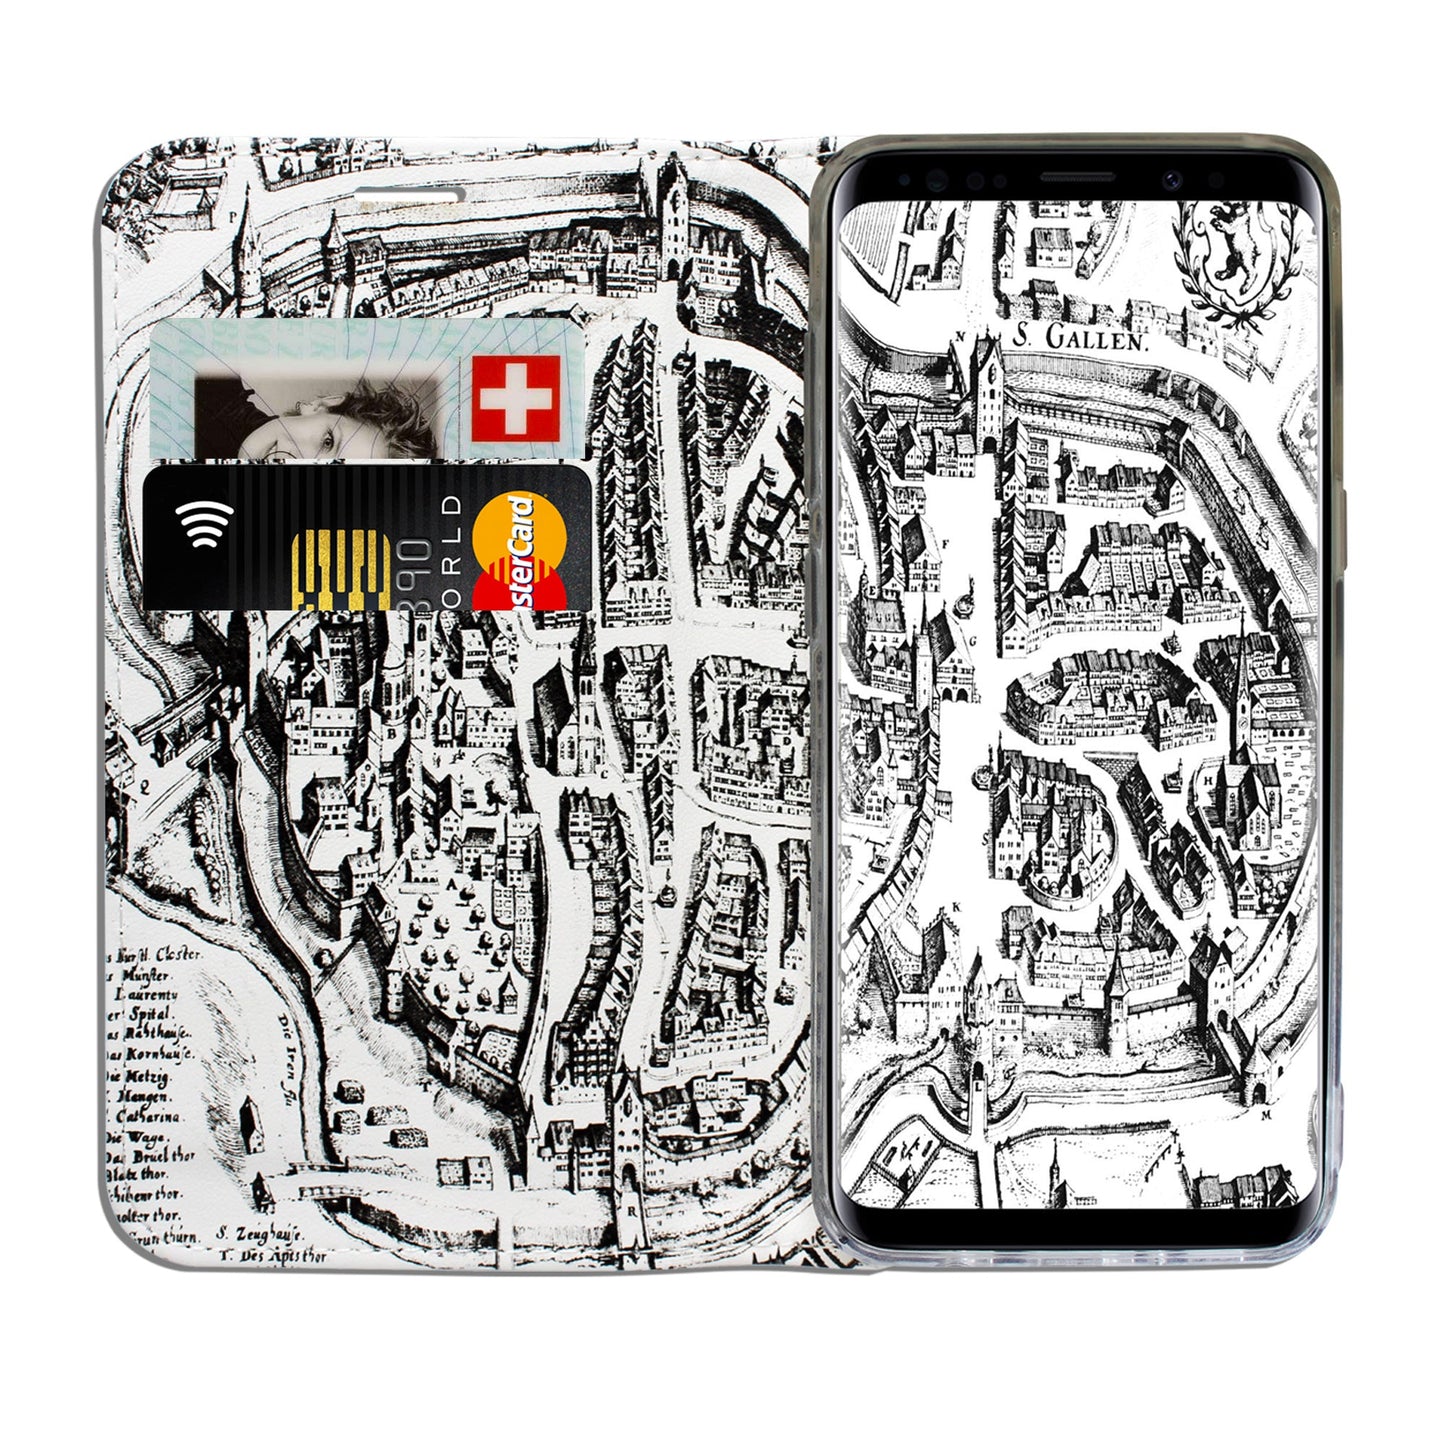 St. Gallen Merian Panorama Case for Samsung Galaxy S9